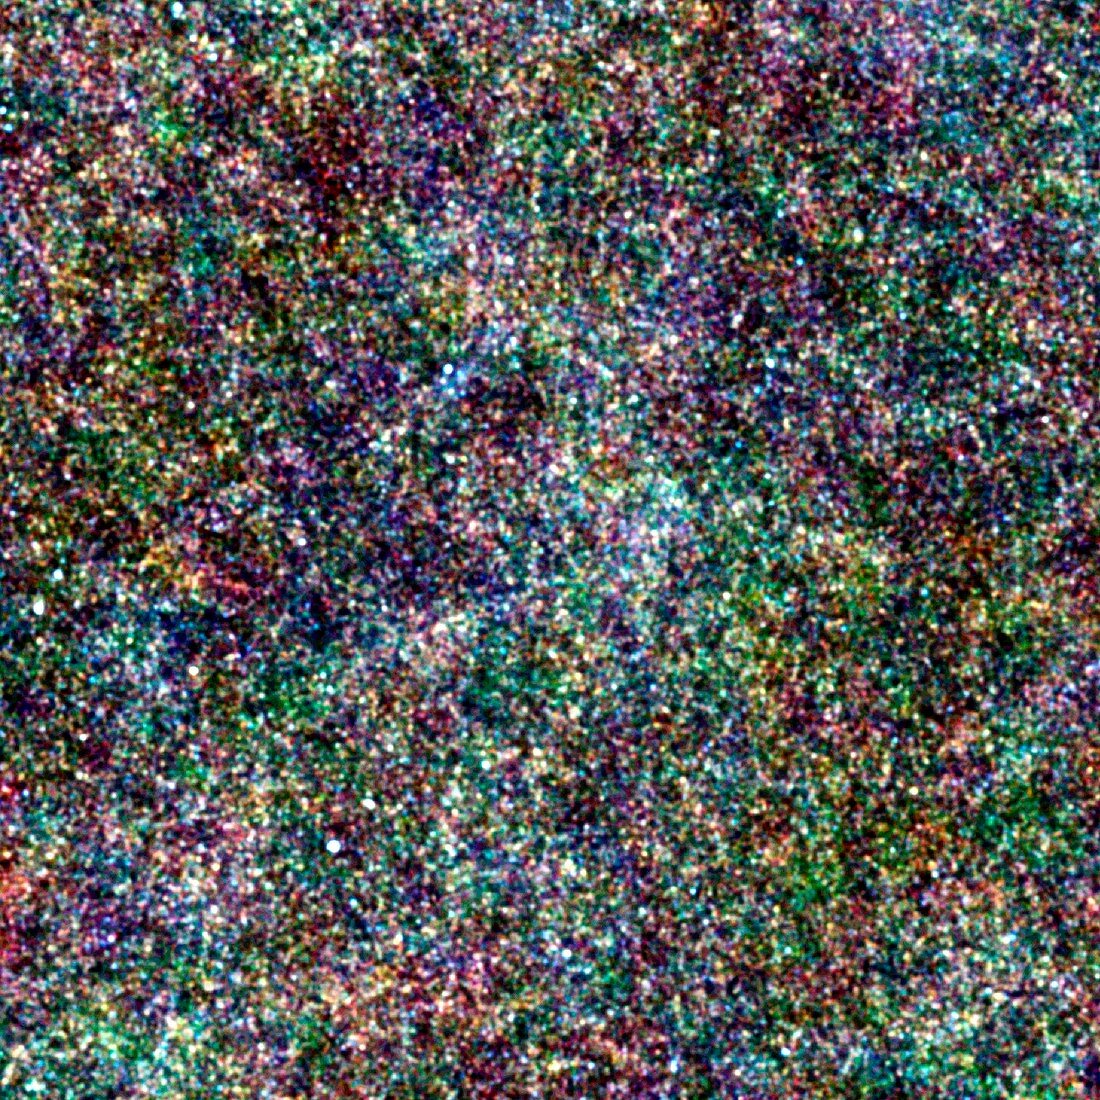 Lockman Hole galaxies,HSO image